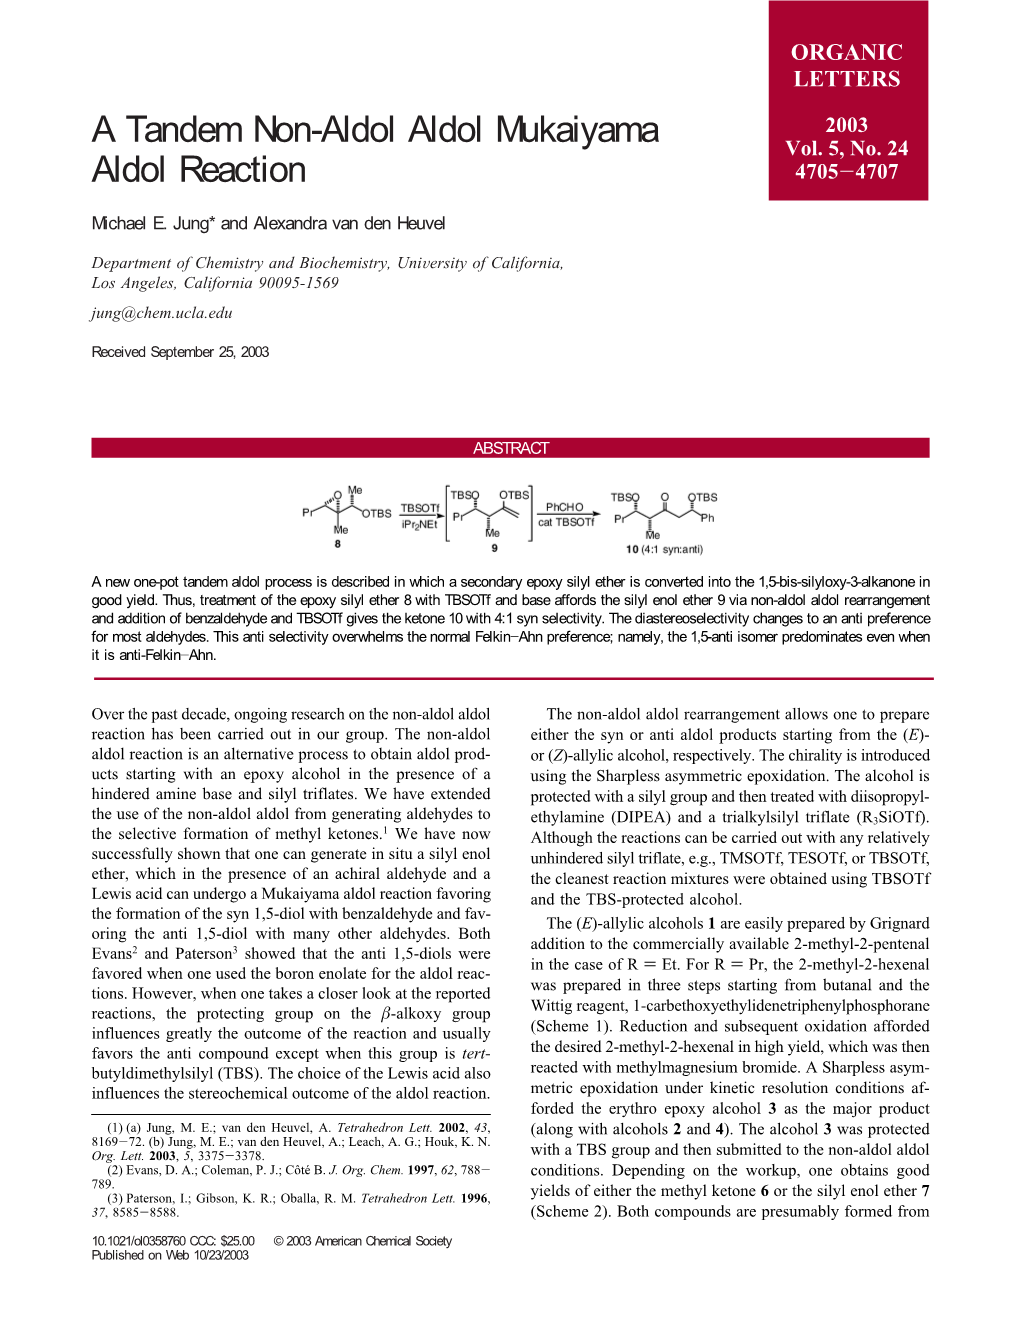 A Tandem Non-Aldol Aldol Mukaiyama Aldol Reaction